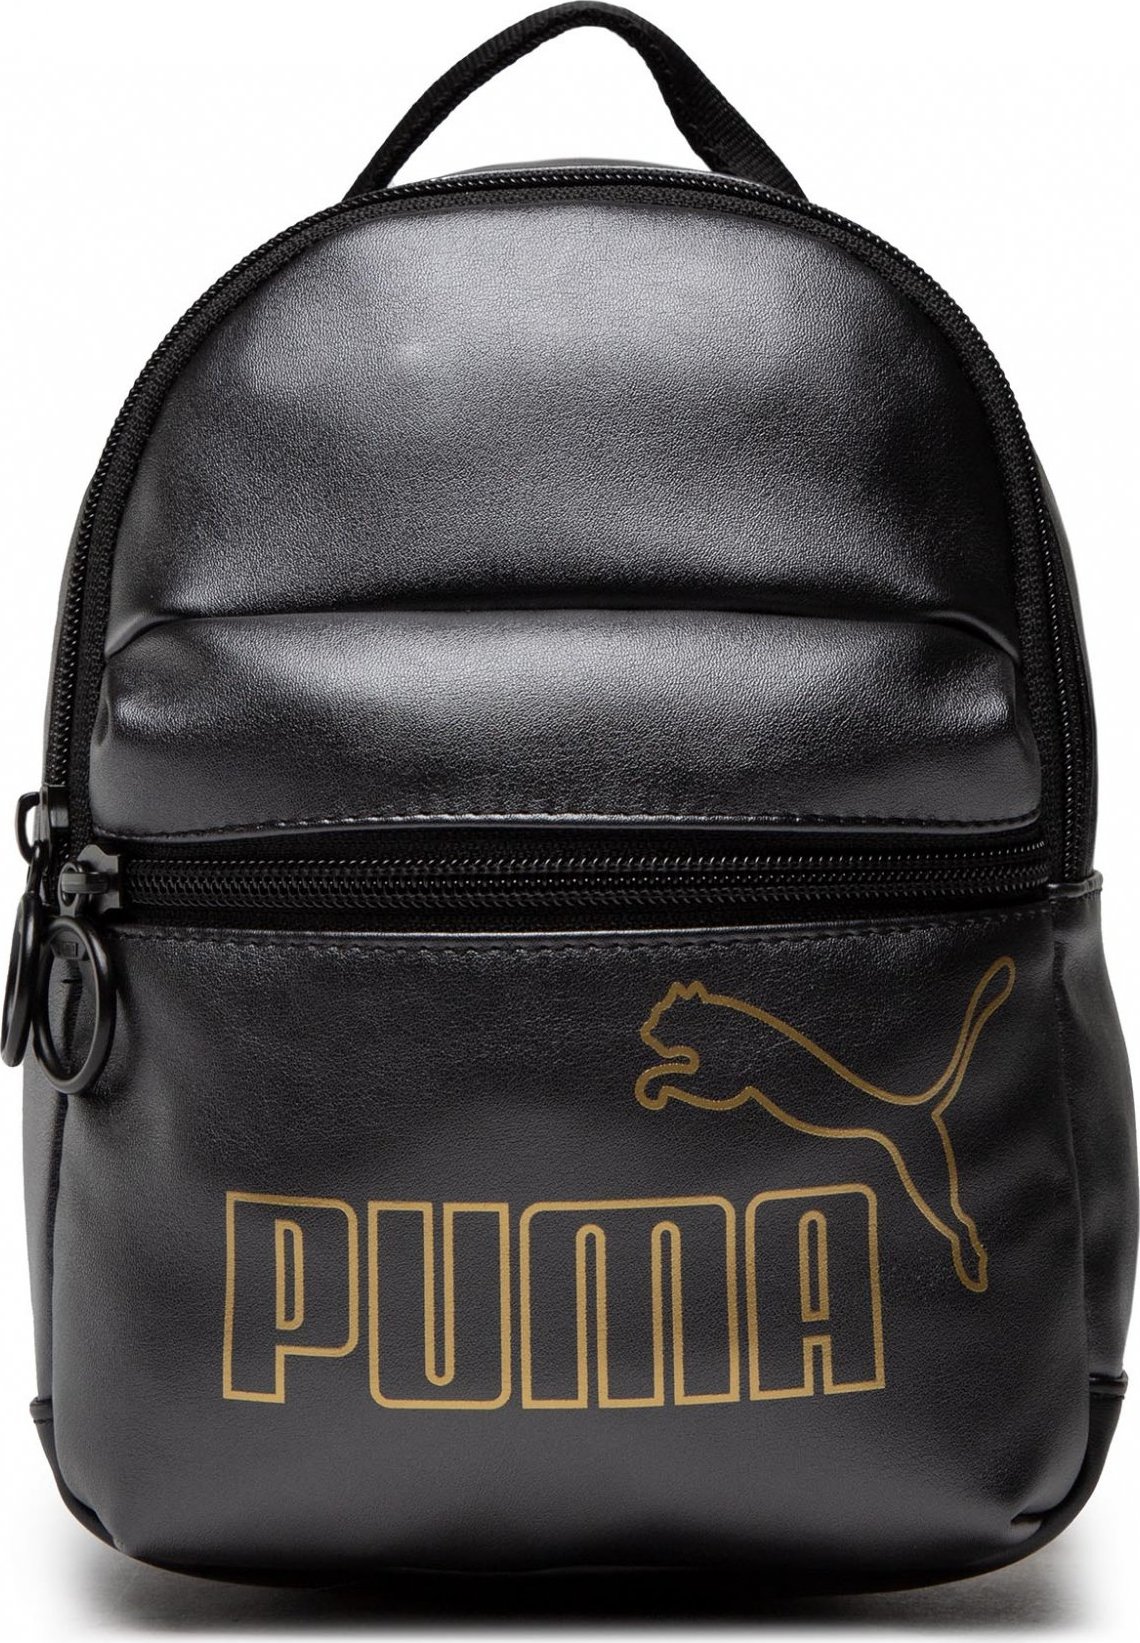 Puma Core Up Minime Backpack 791540 01